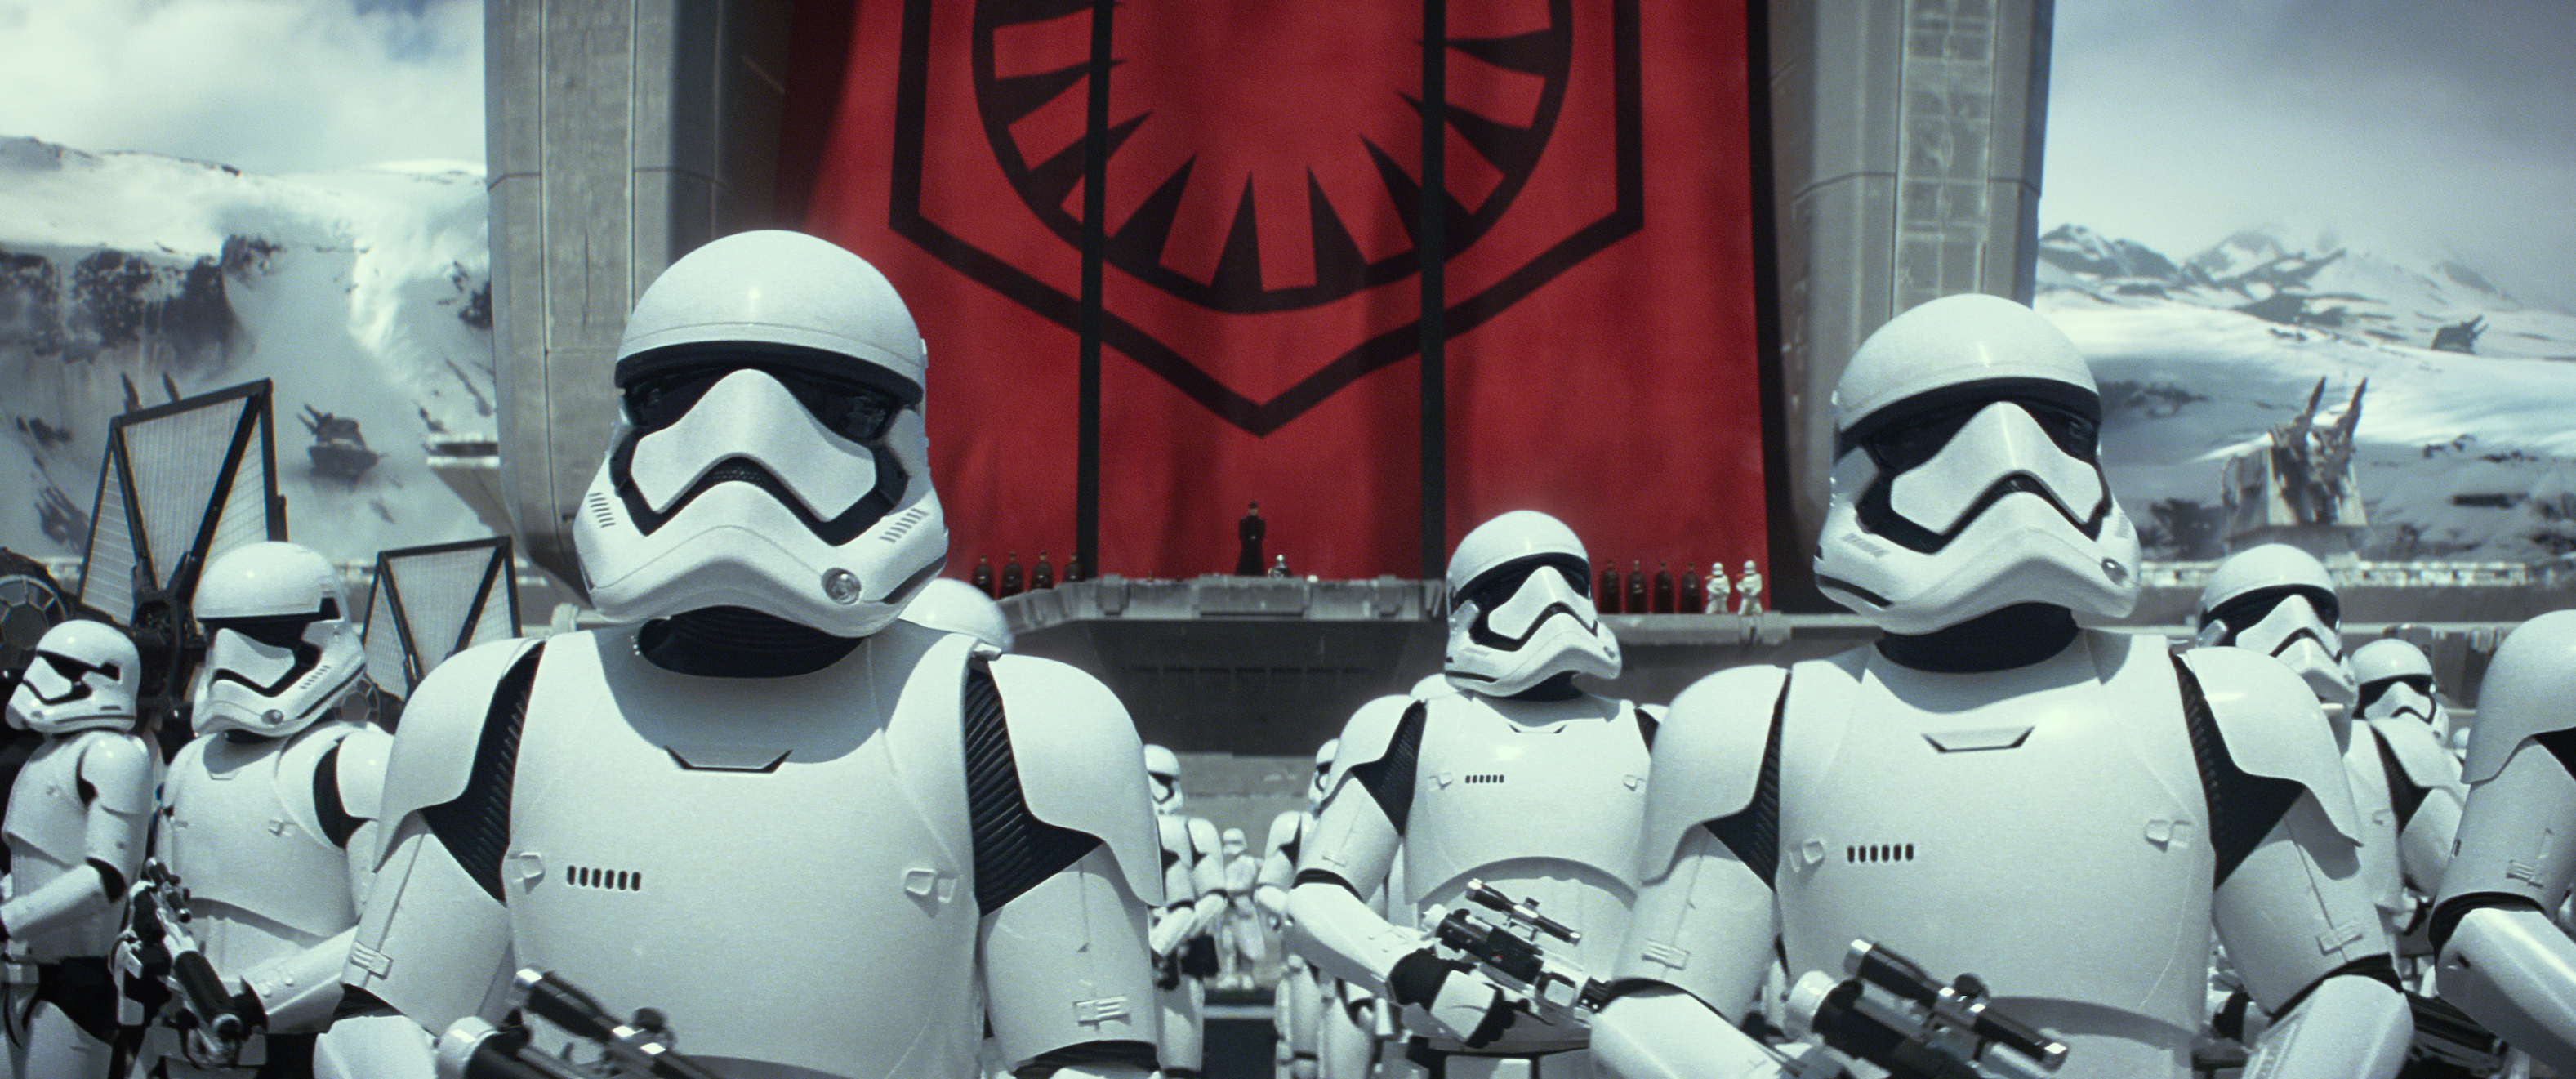 stormtrooper, movie, star wars episode vii: the force awakens, star wars